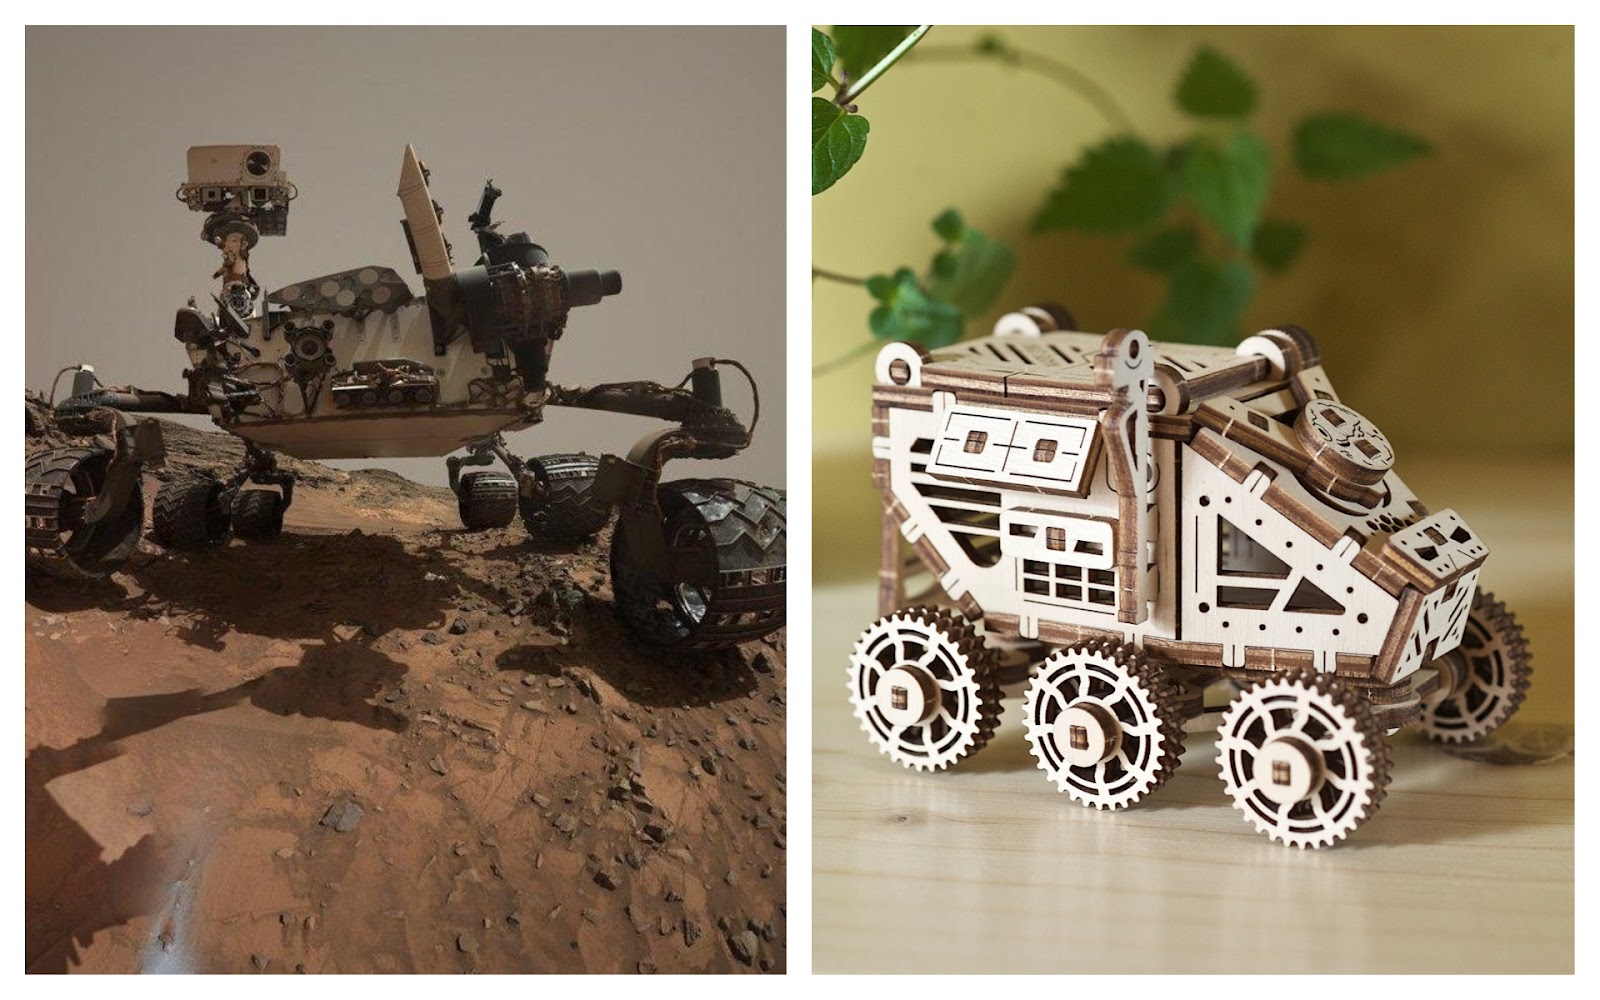 Слева: марсоход Curiosity. Справа: Ugears Марсобагги